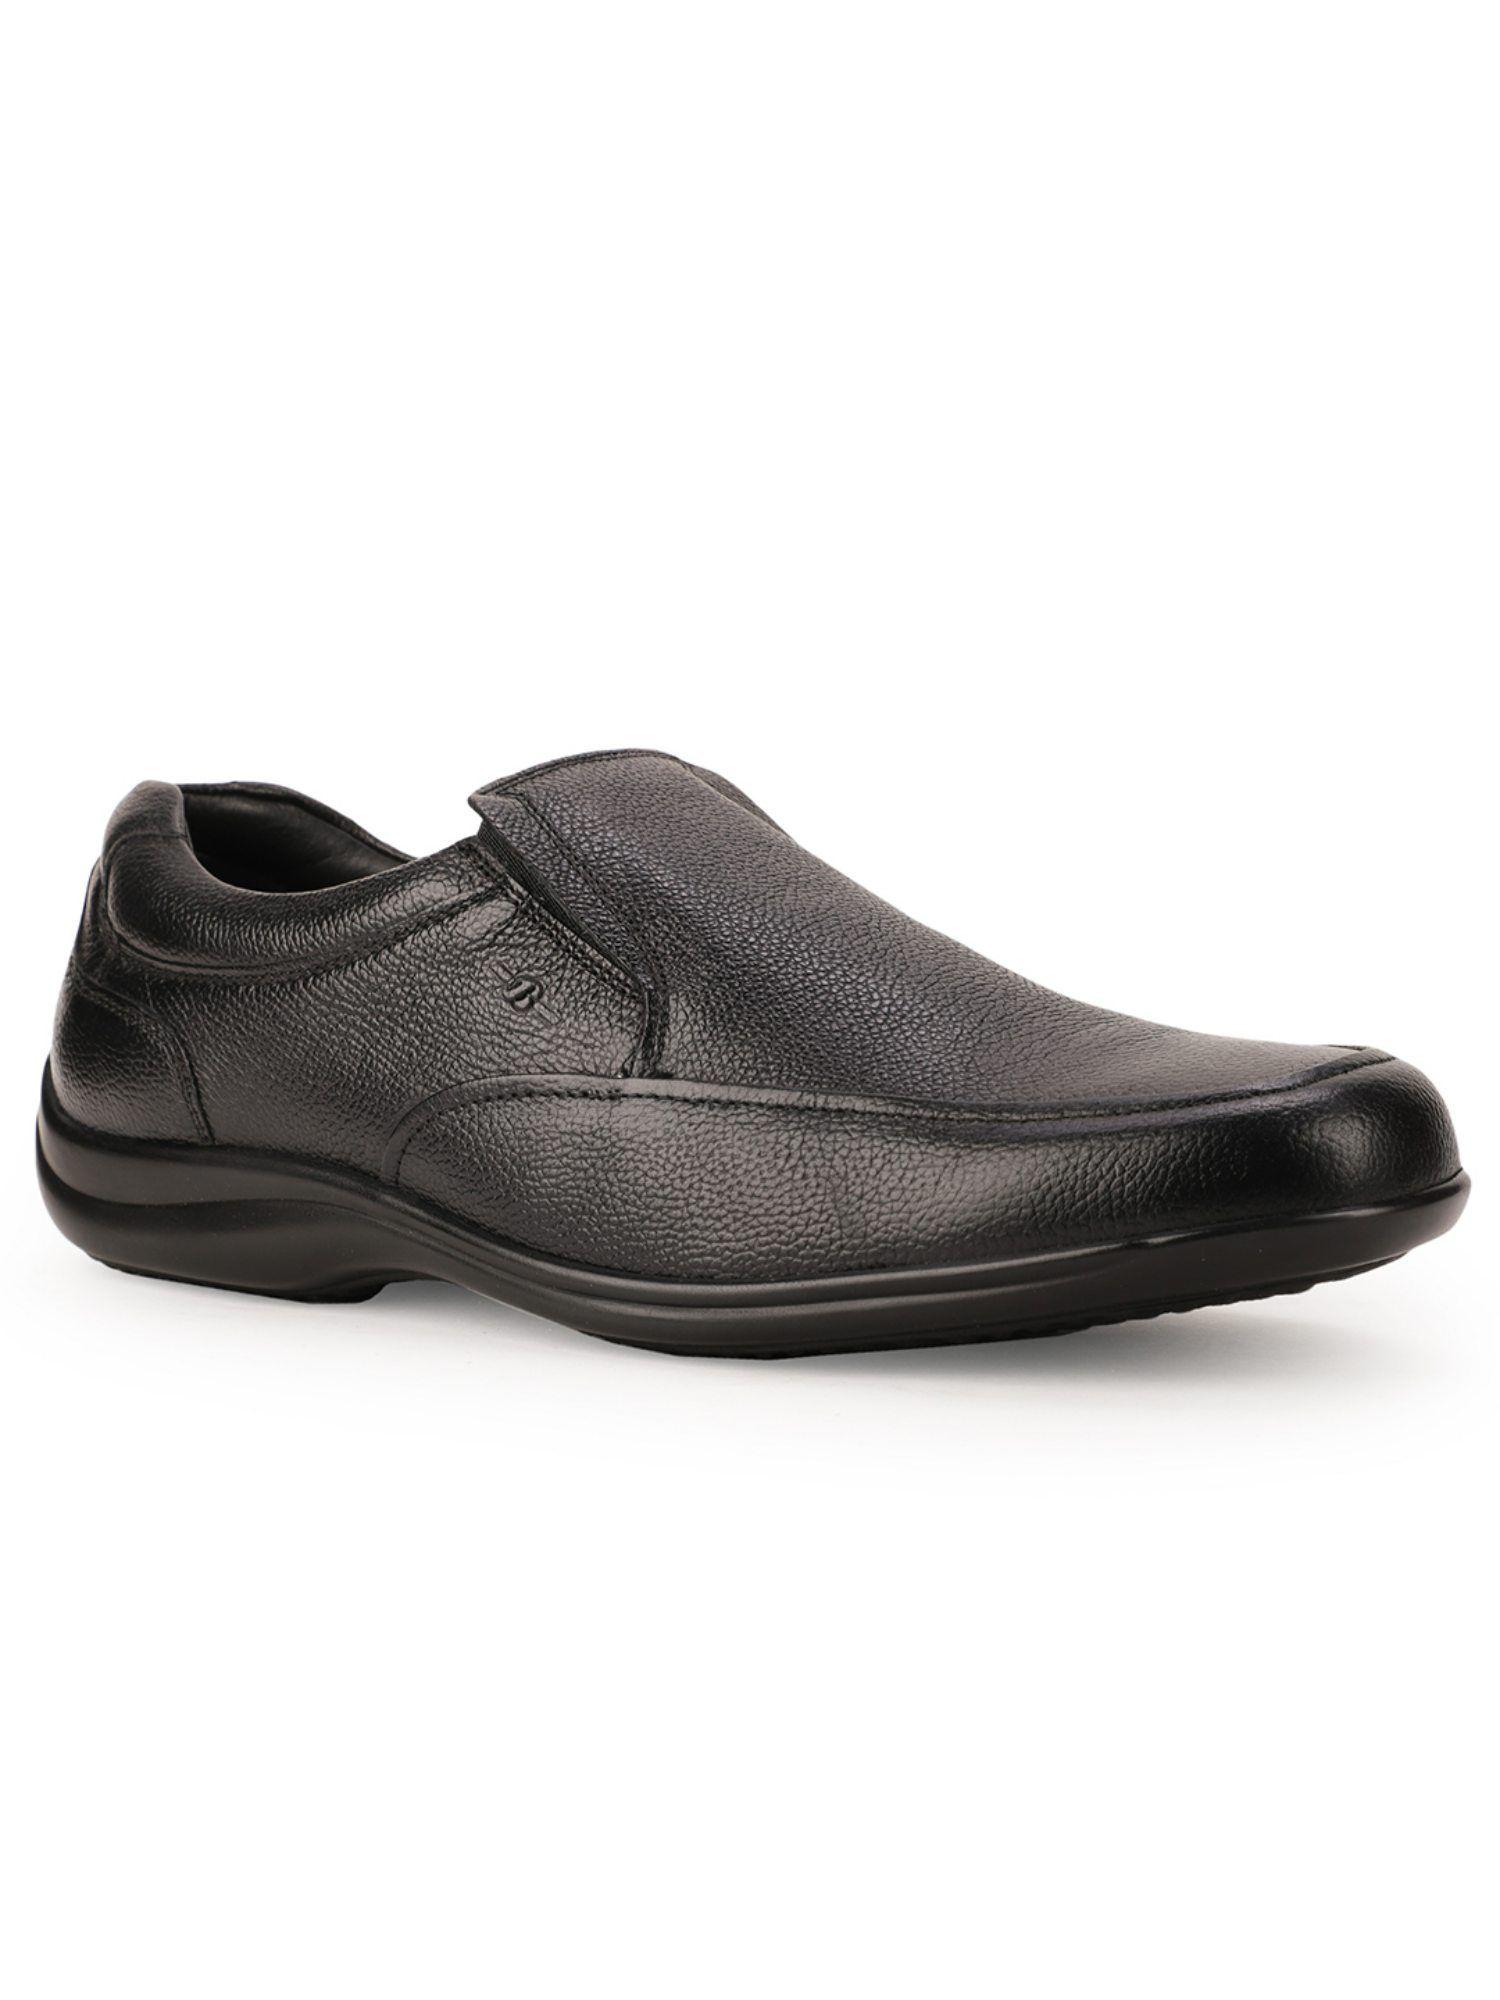 solid-black-formal-shoes